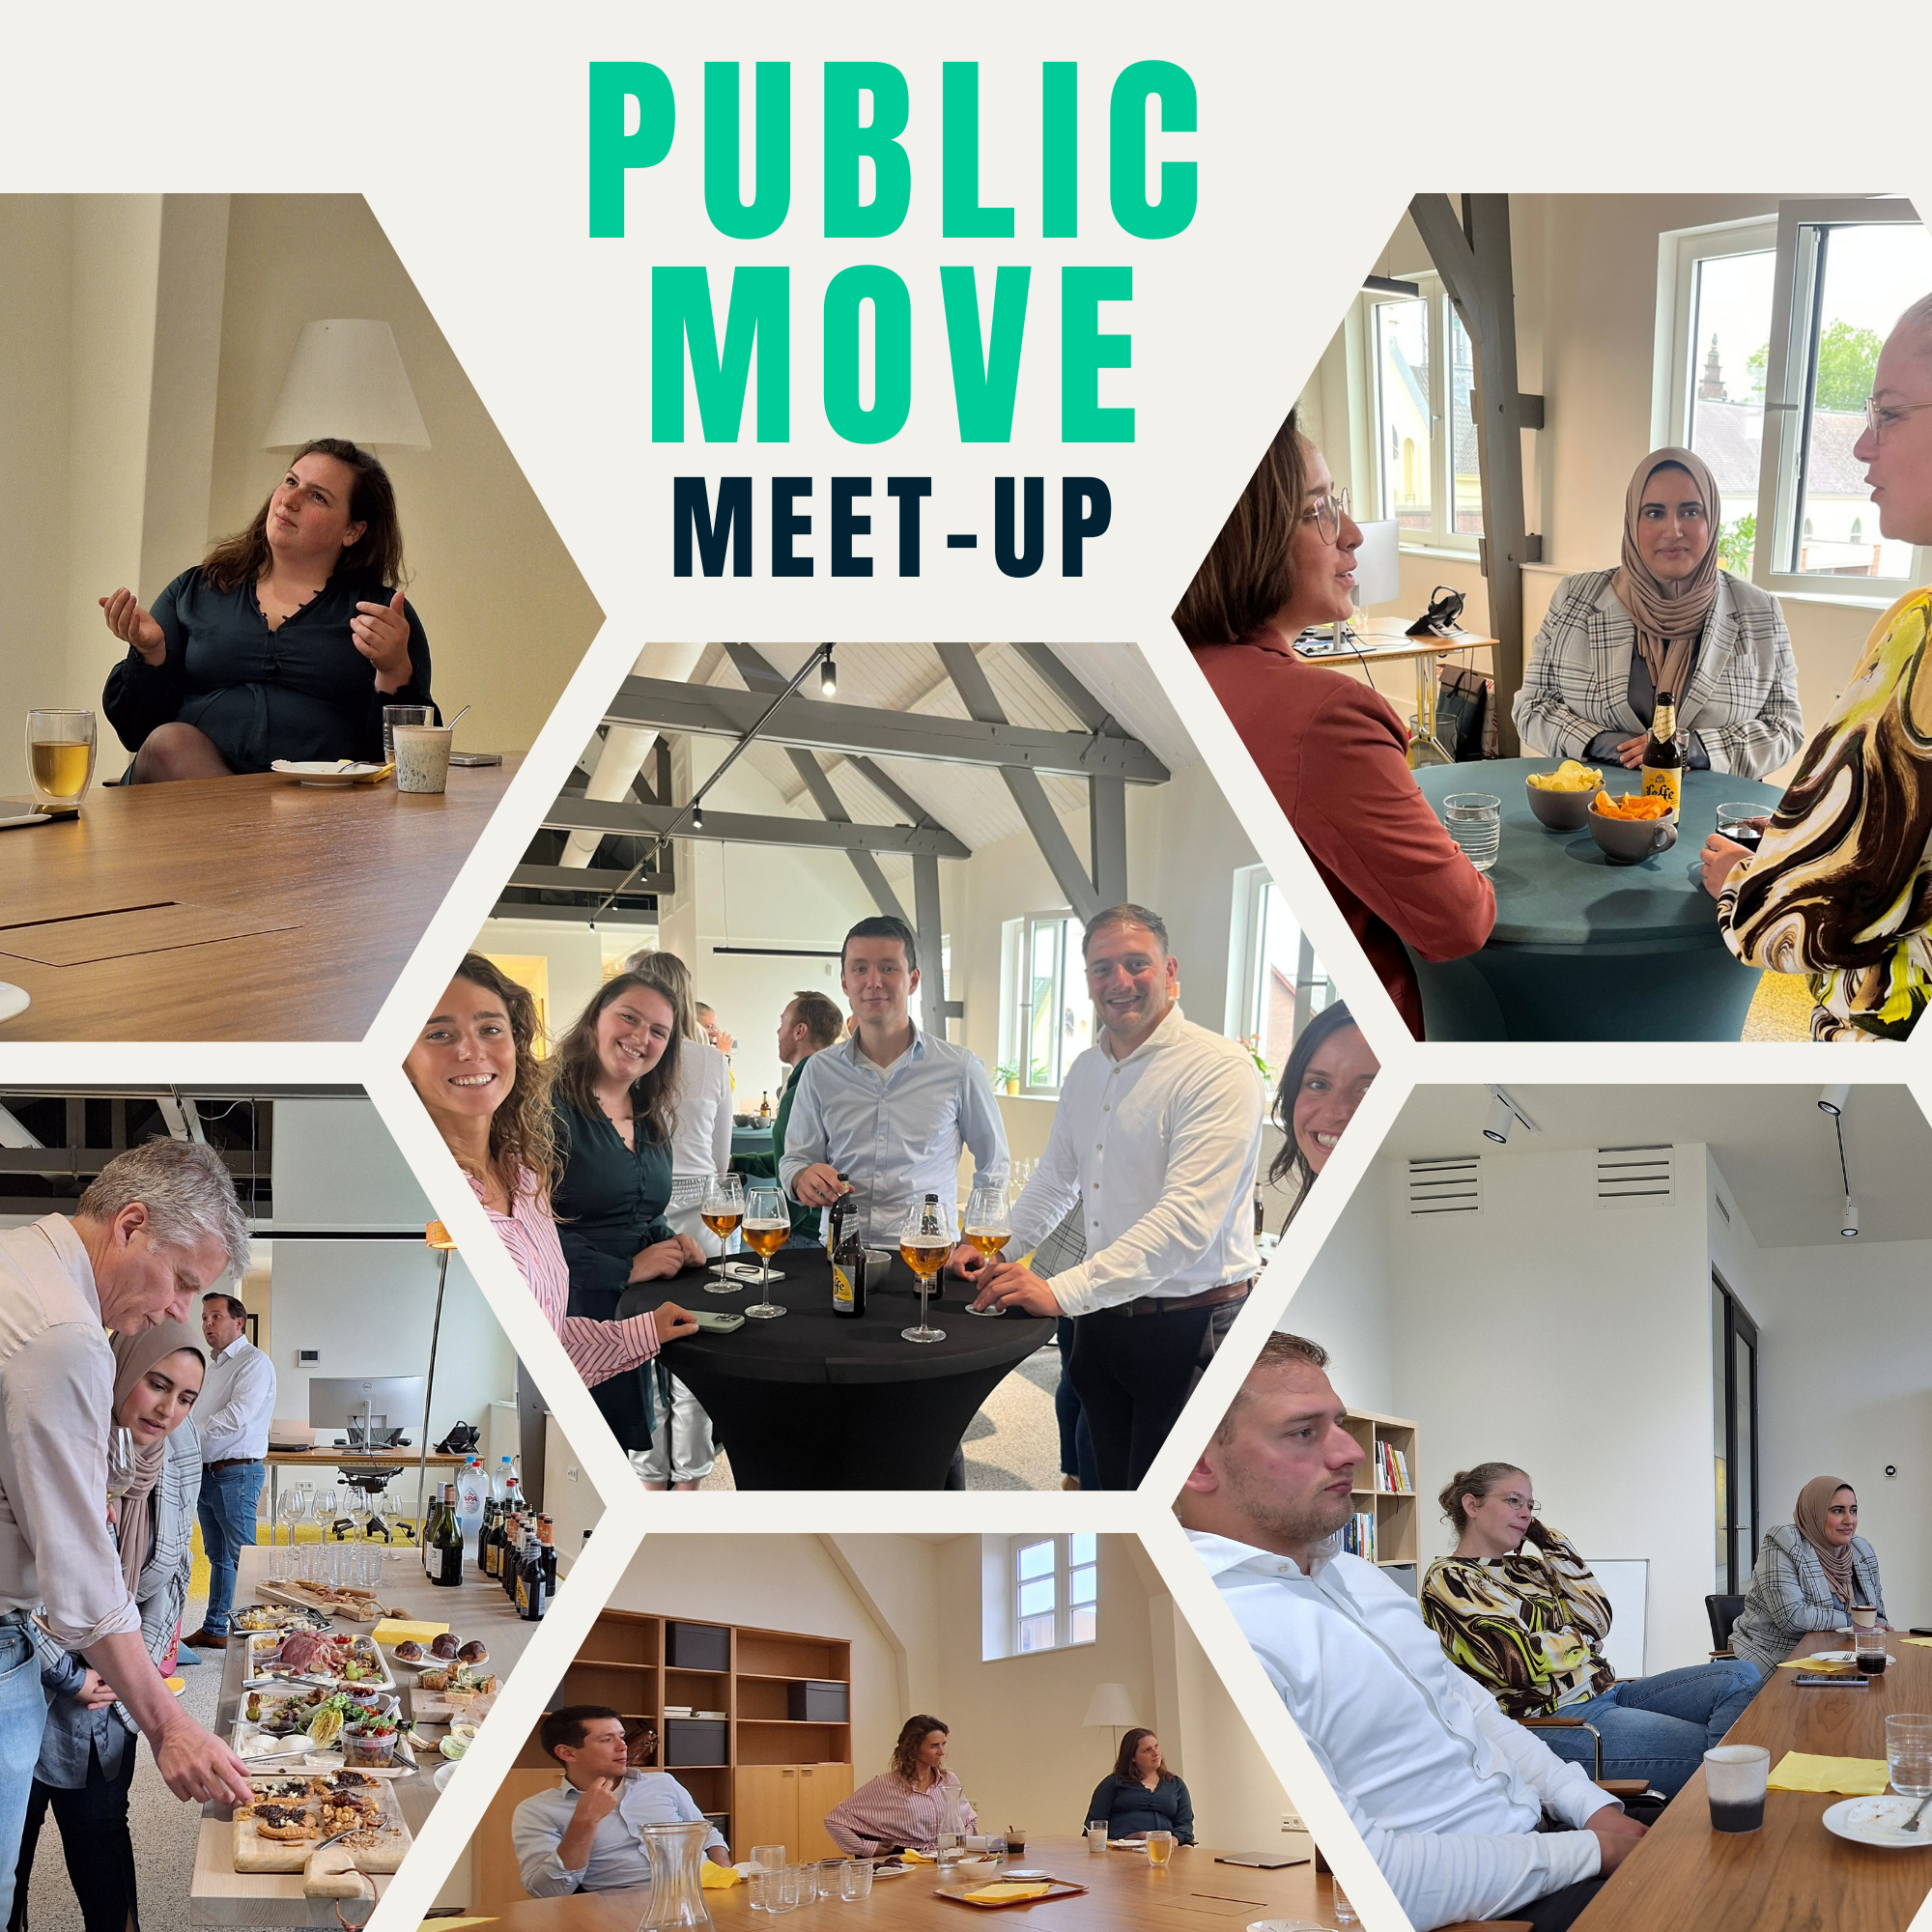 Public Move meet-up